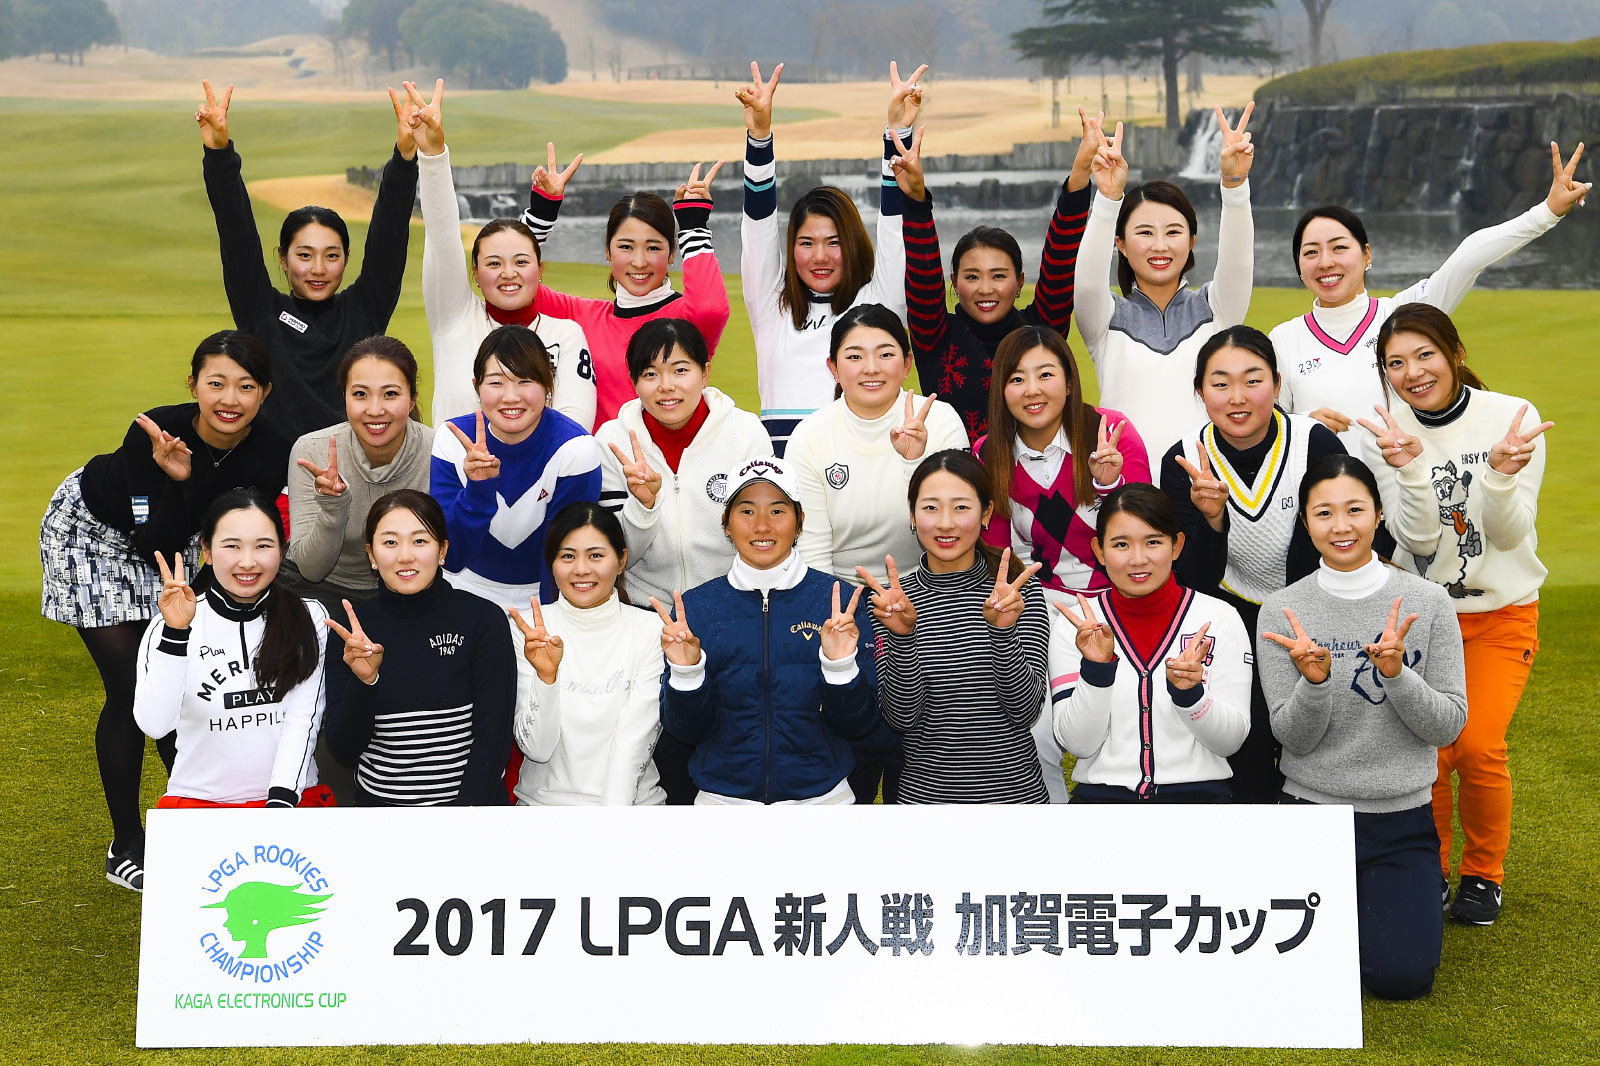 2017 LPGA 新人戦加賀電子カップ